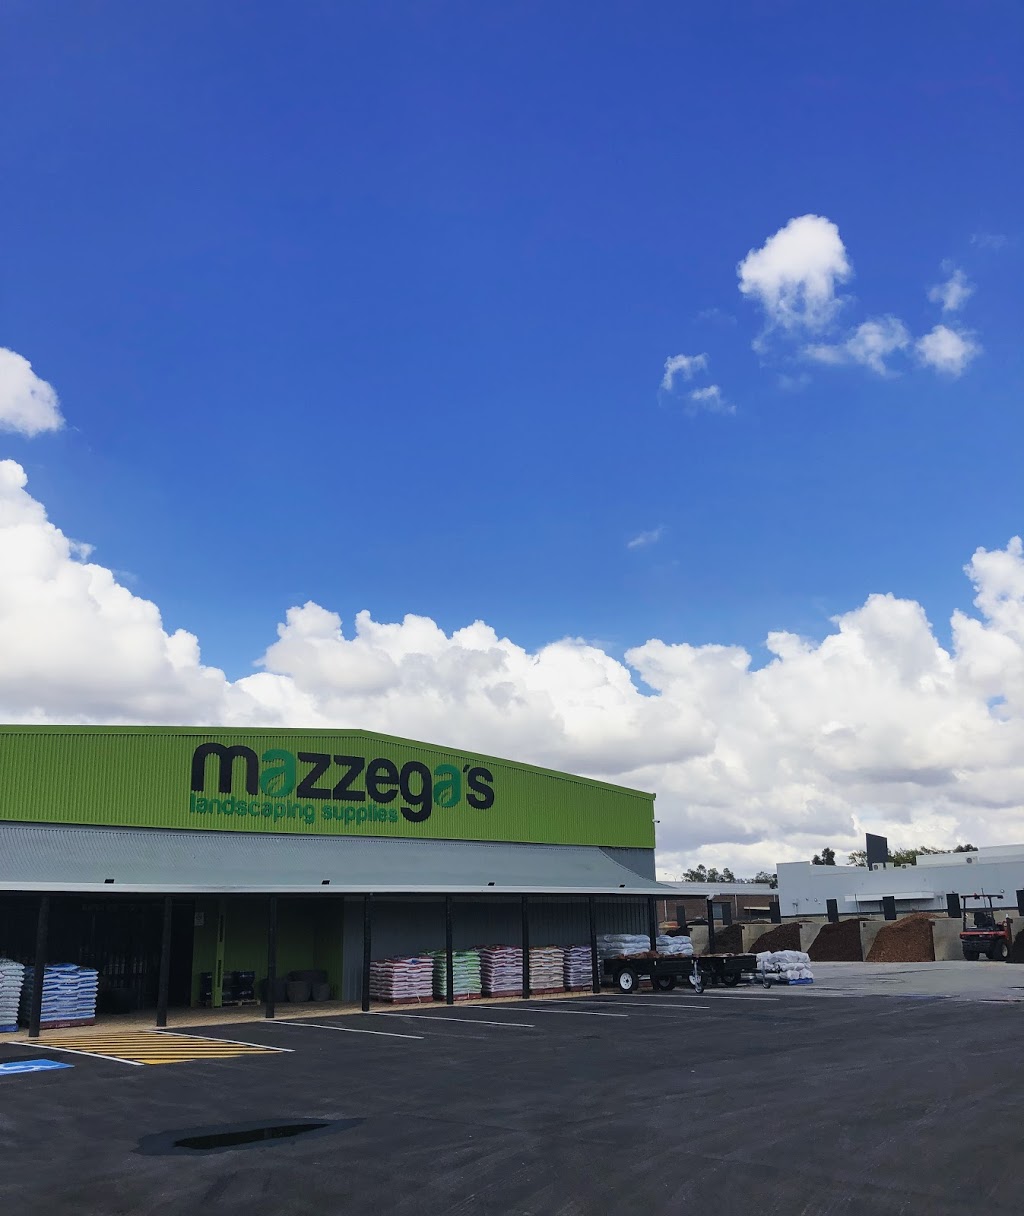 Mazzegas Landscaping Supplies | store | 80 Gillam Dr, Kelmscott WA 6111, Australia | 0864960111 OR +61 8 6496 0111